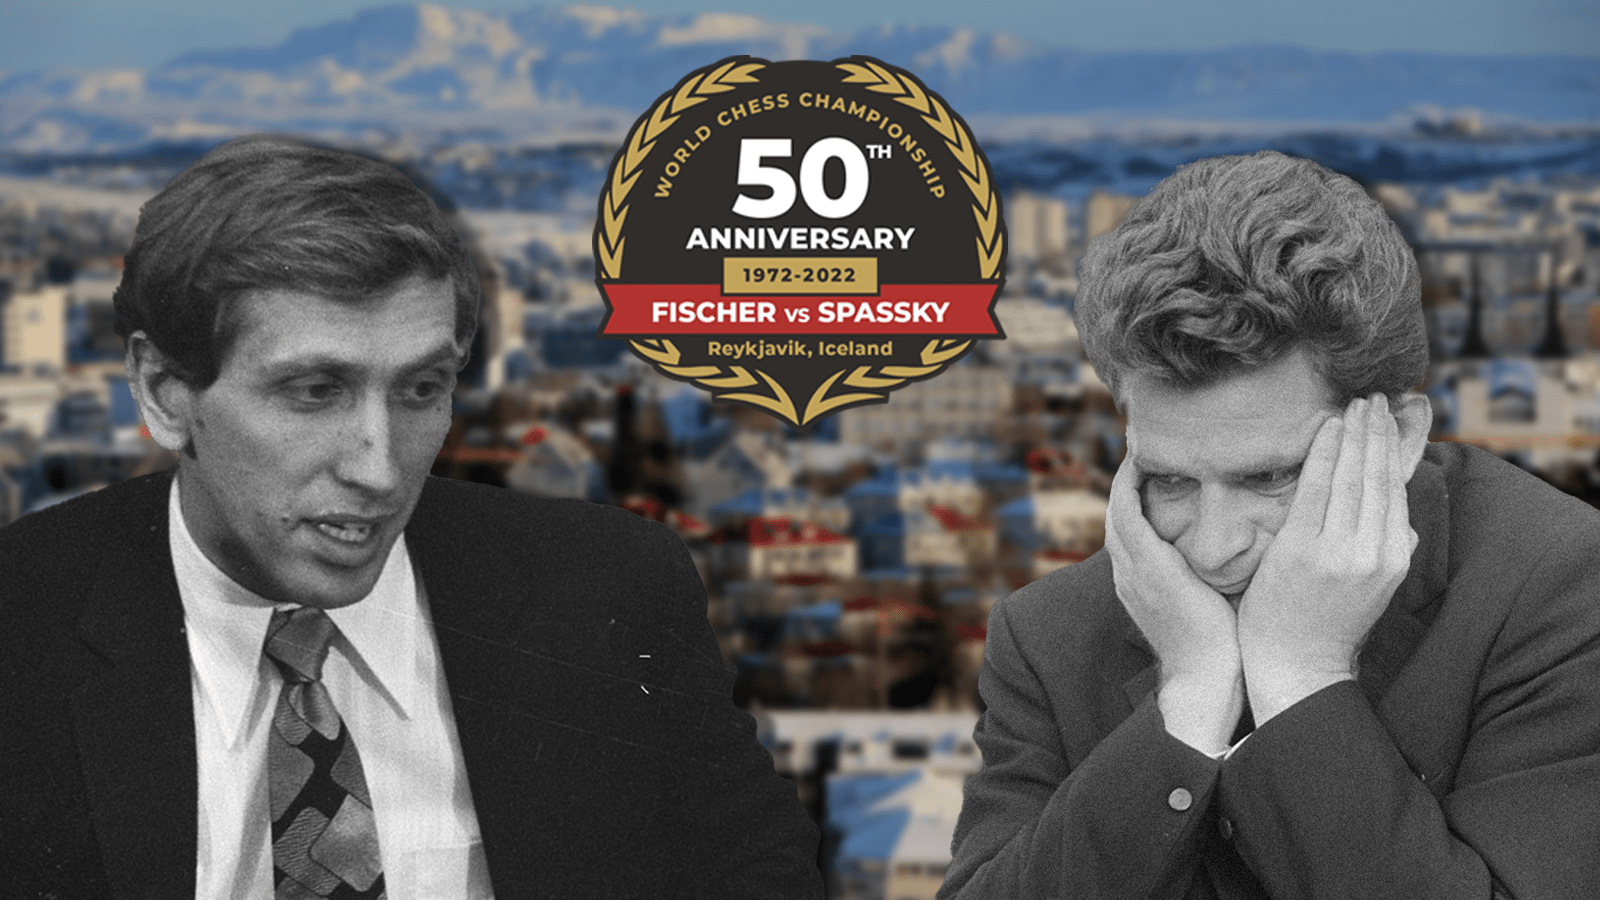 Boris Spassky vs Tigran Petrosian • World Championship Match, 1966 